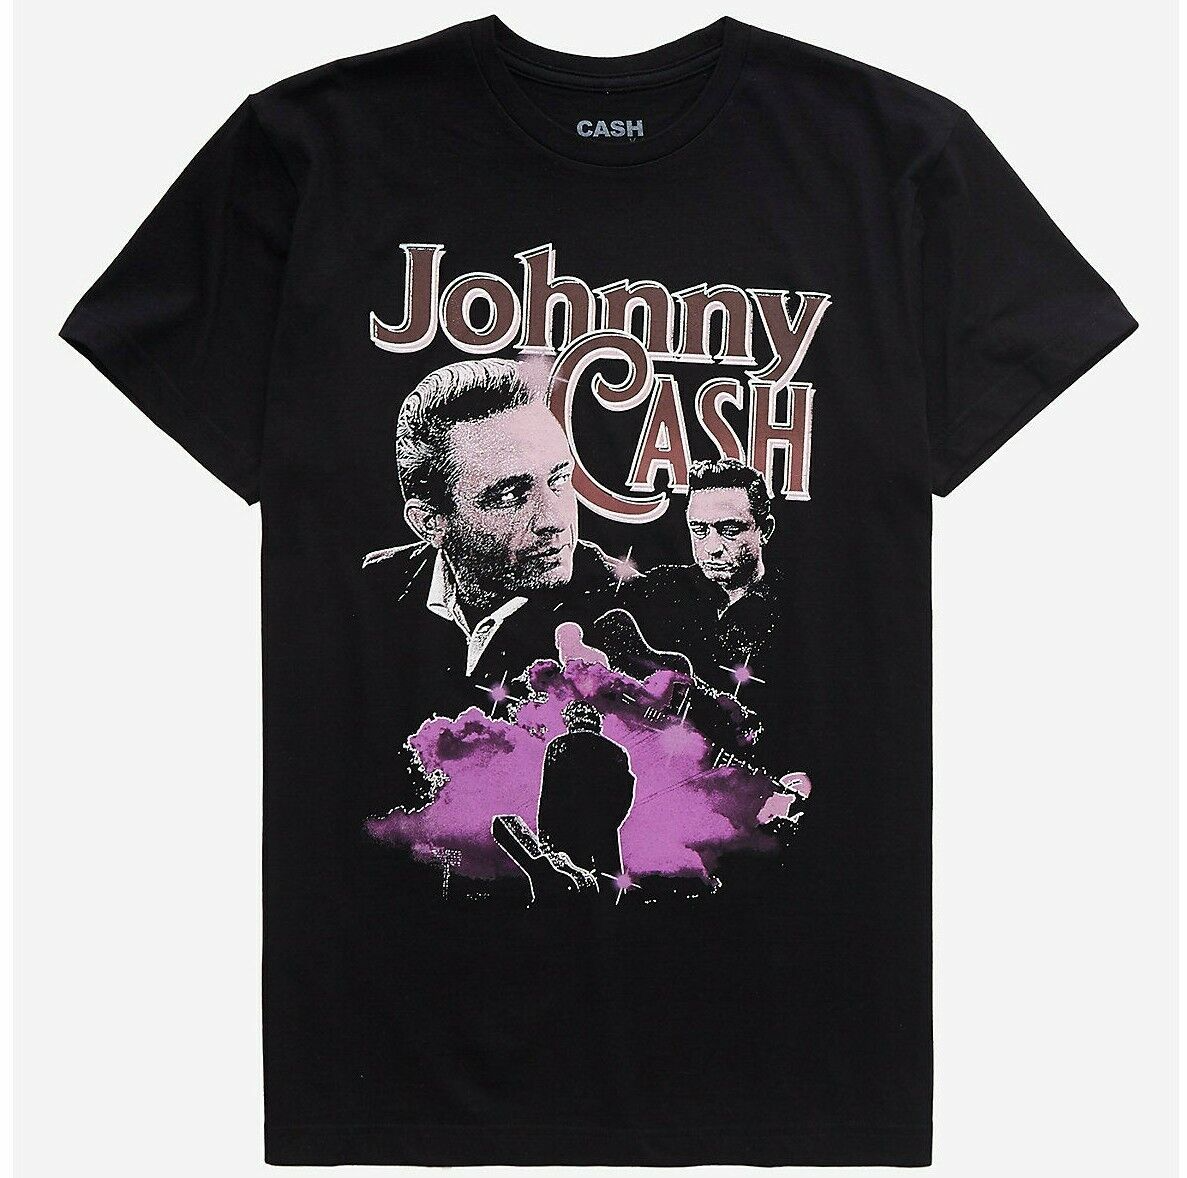 Johnny Cash The Man in Black Portrait T-Shirt